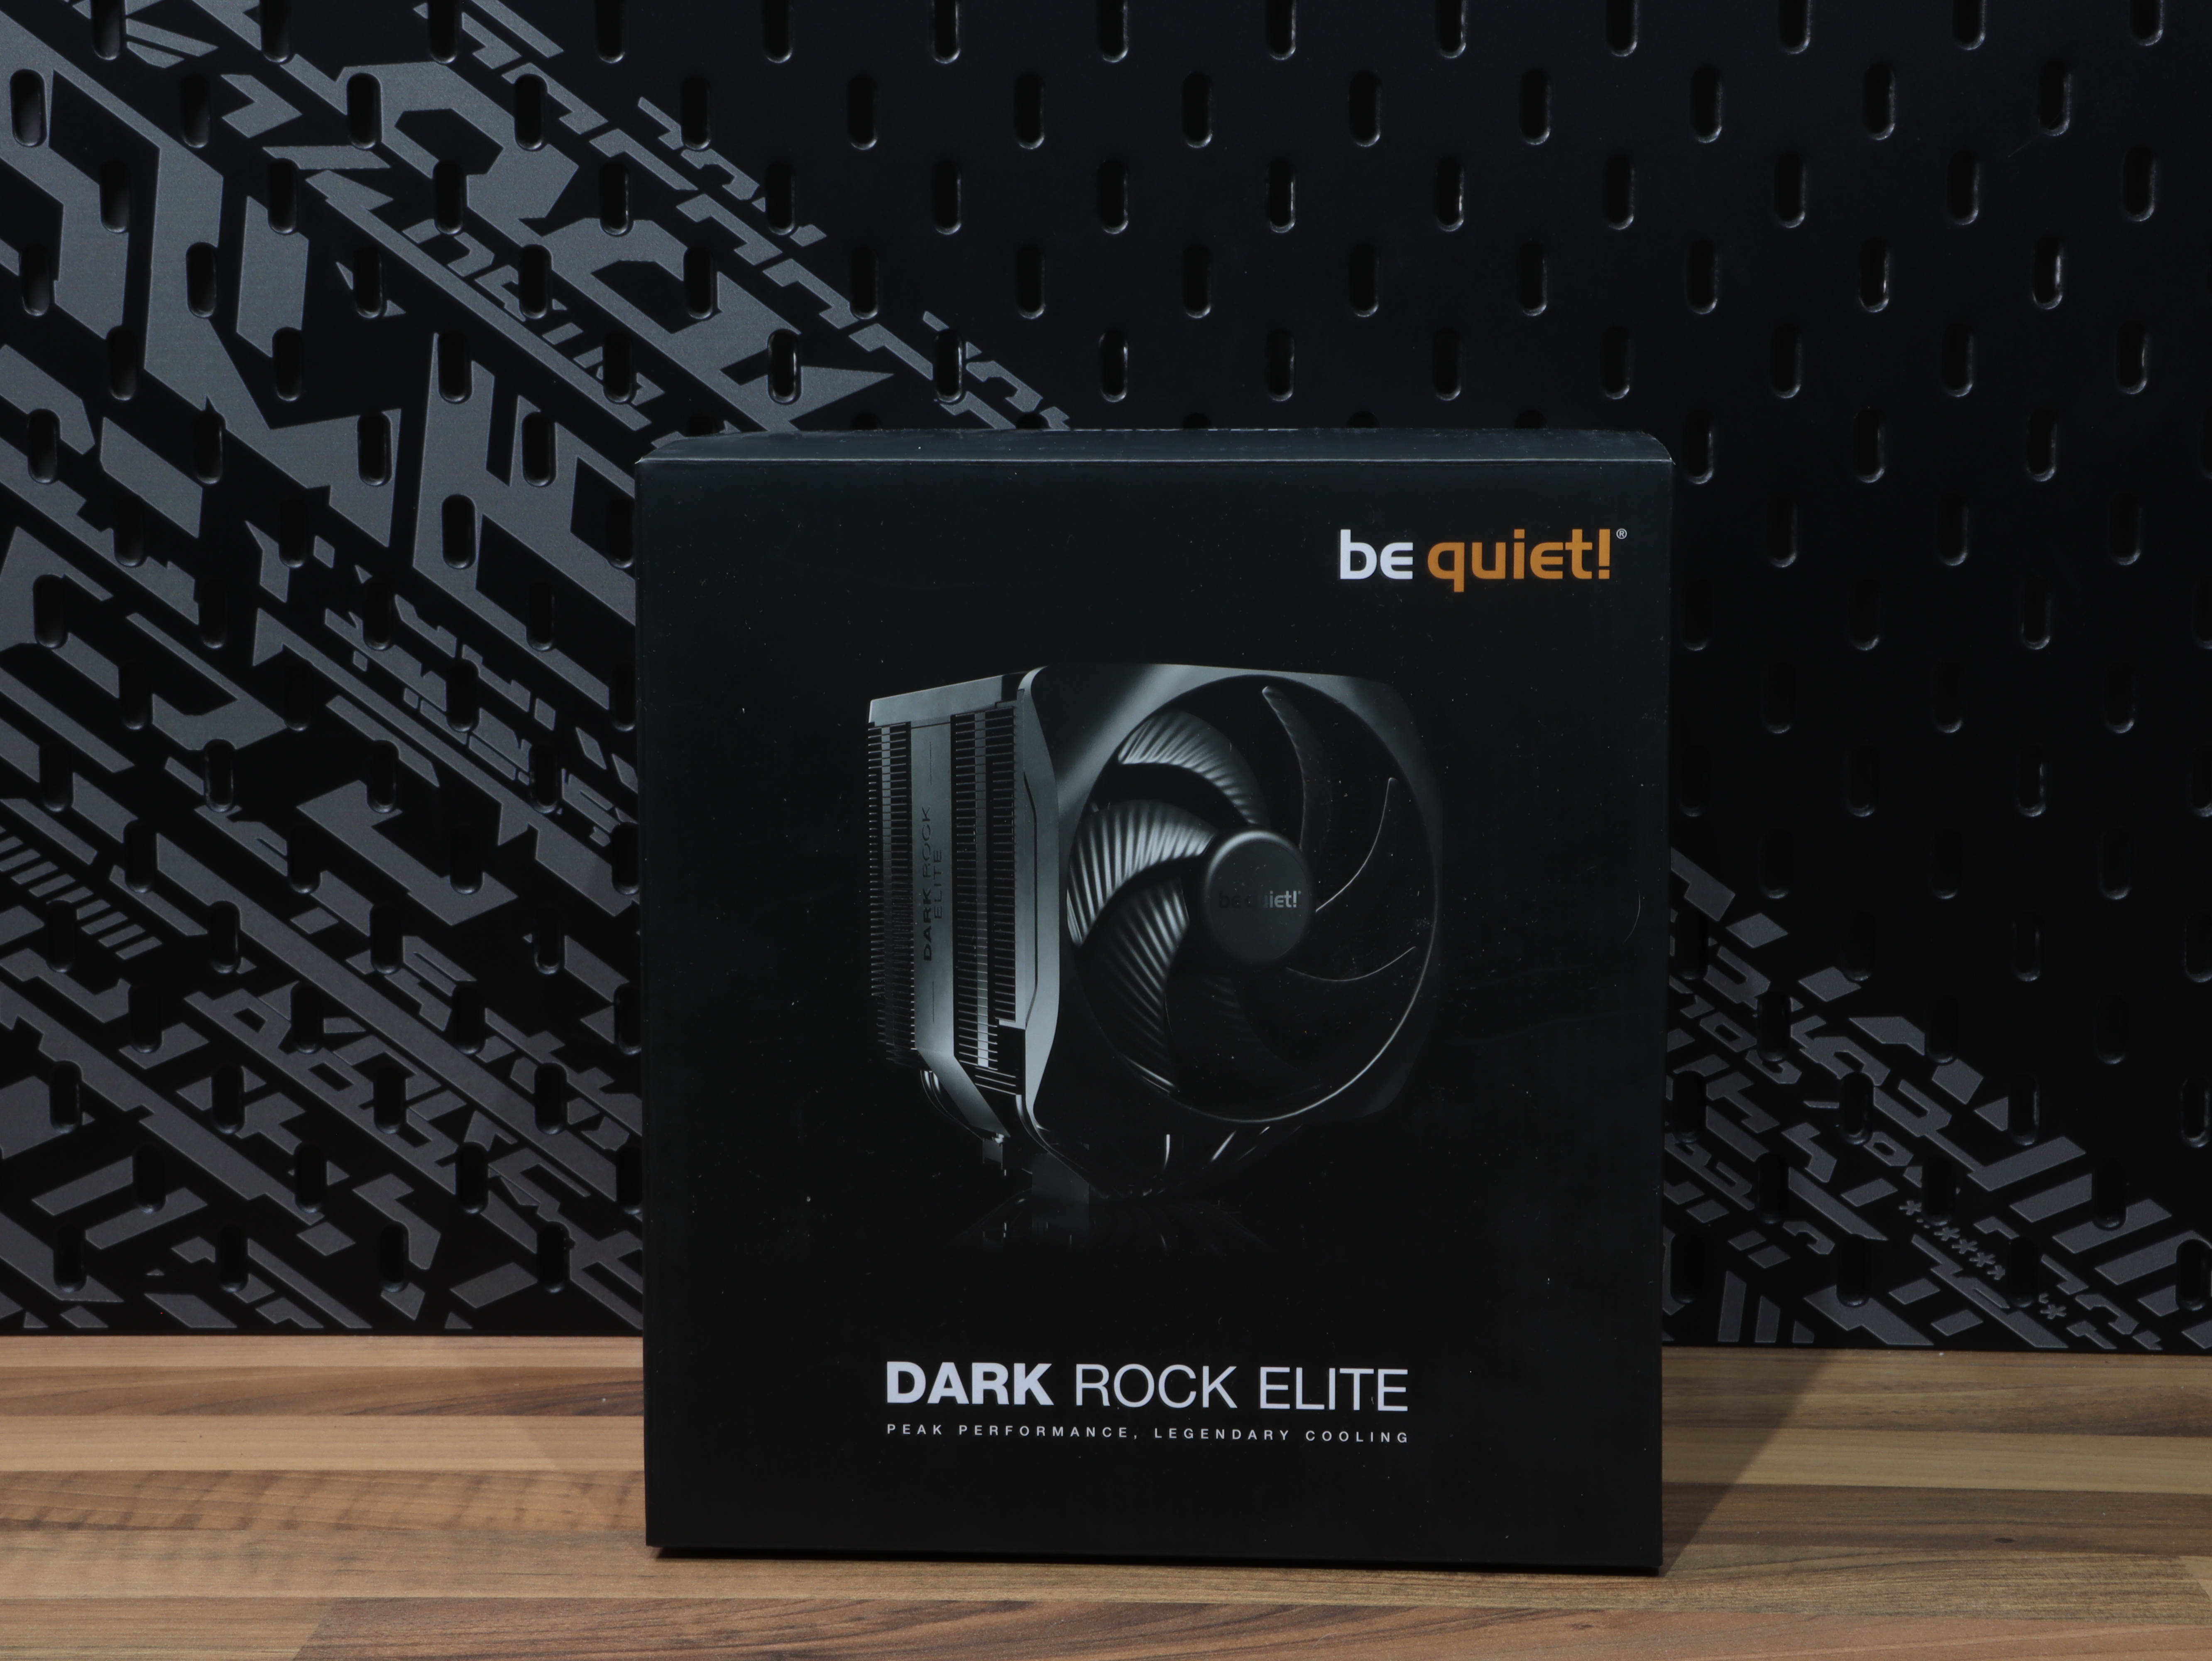 Wings quiet! Elite Special Rock aircooler Mode black Quiet Silent Dark Performance high-performance cooler coating Be.JPG